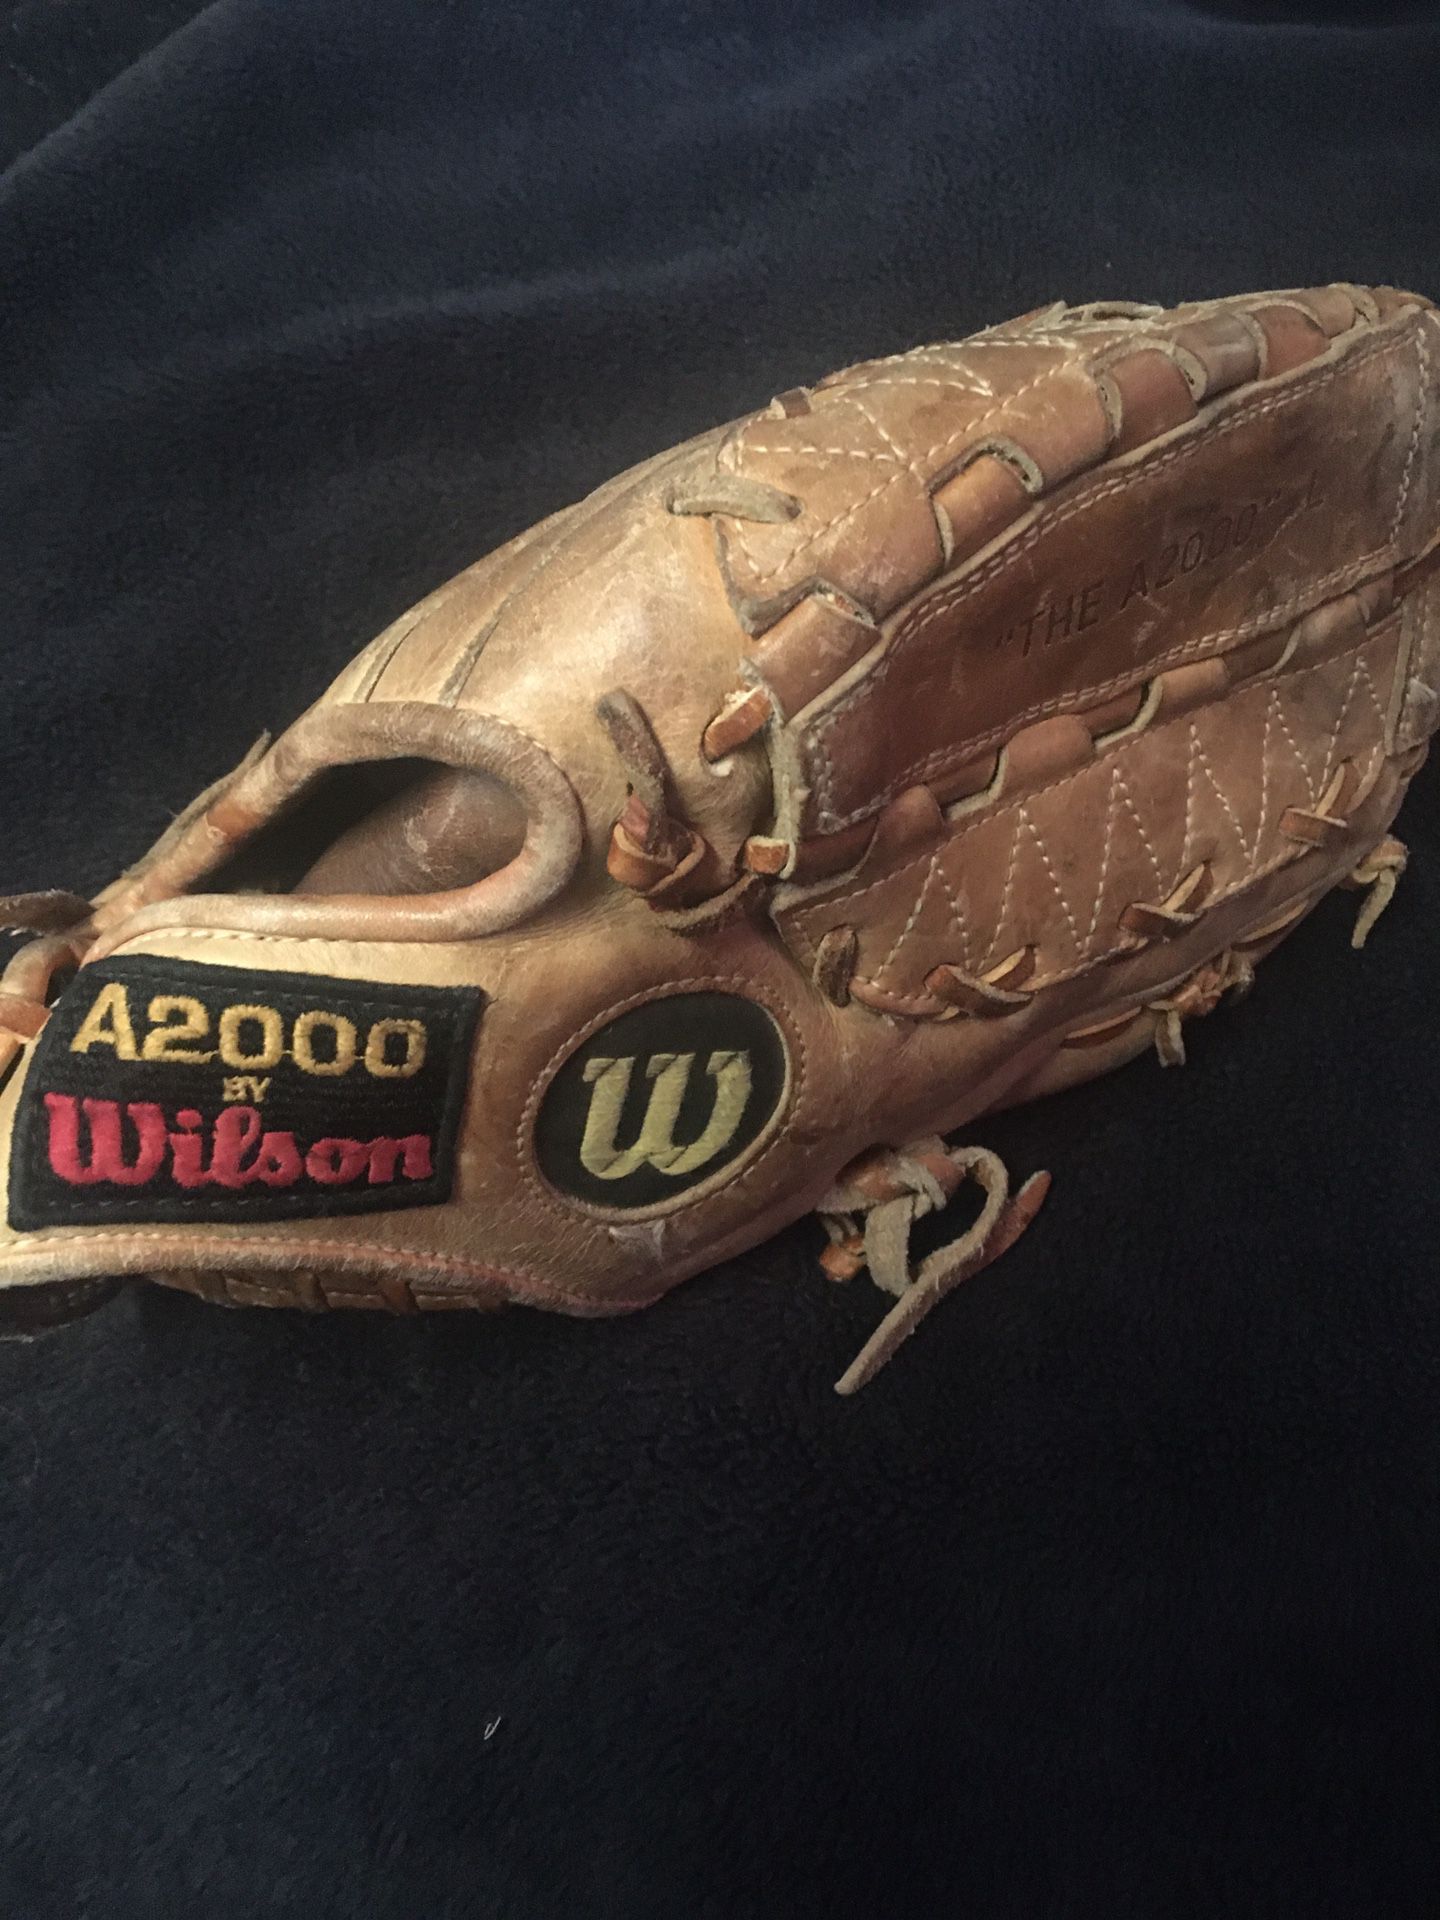 Wilson A2000 11 3/4 baseball or softball glove good condition